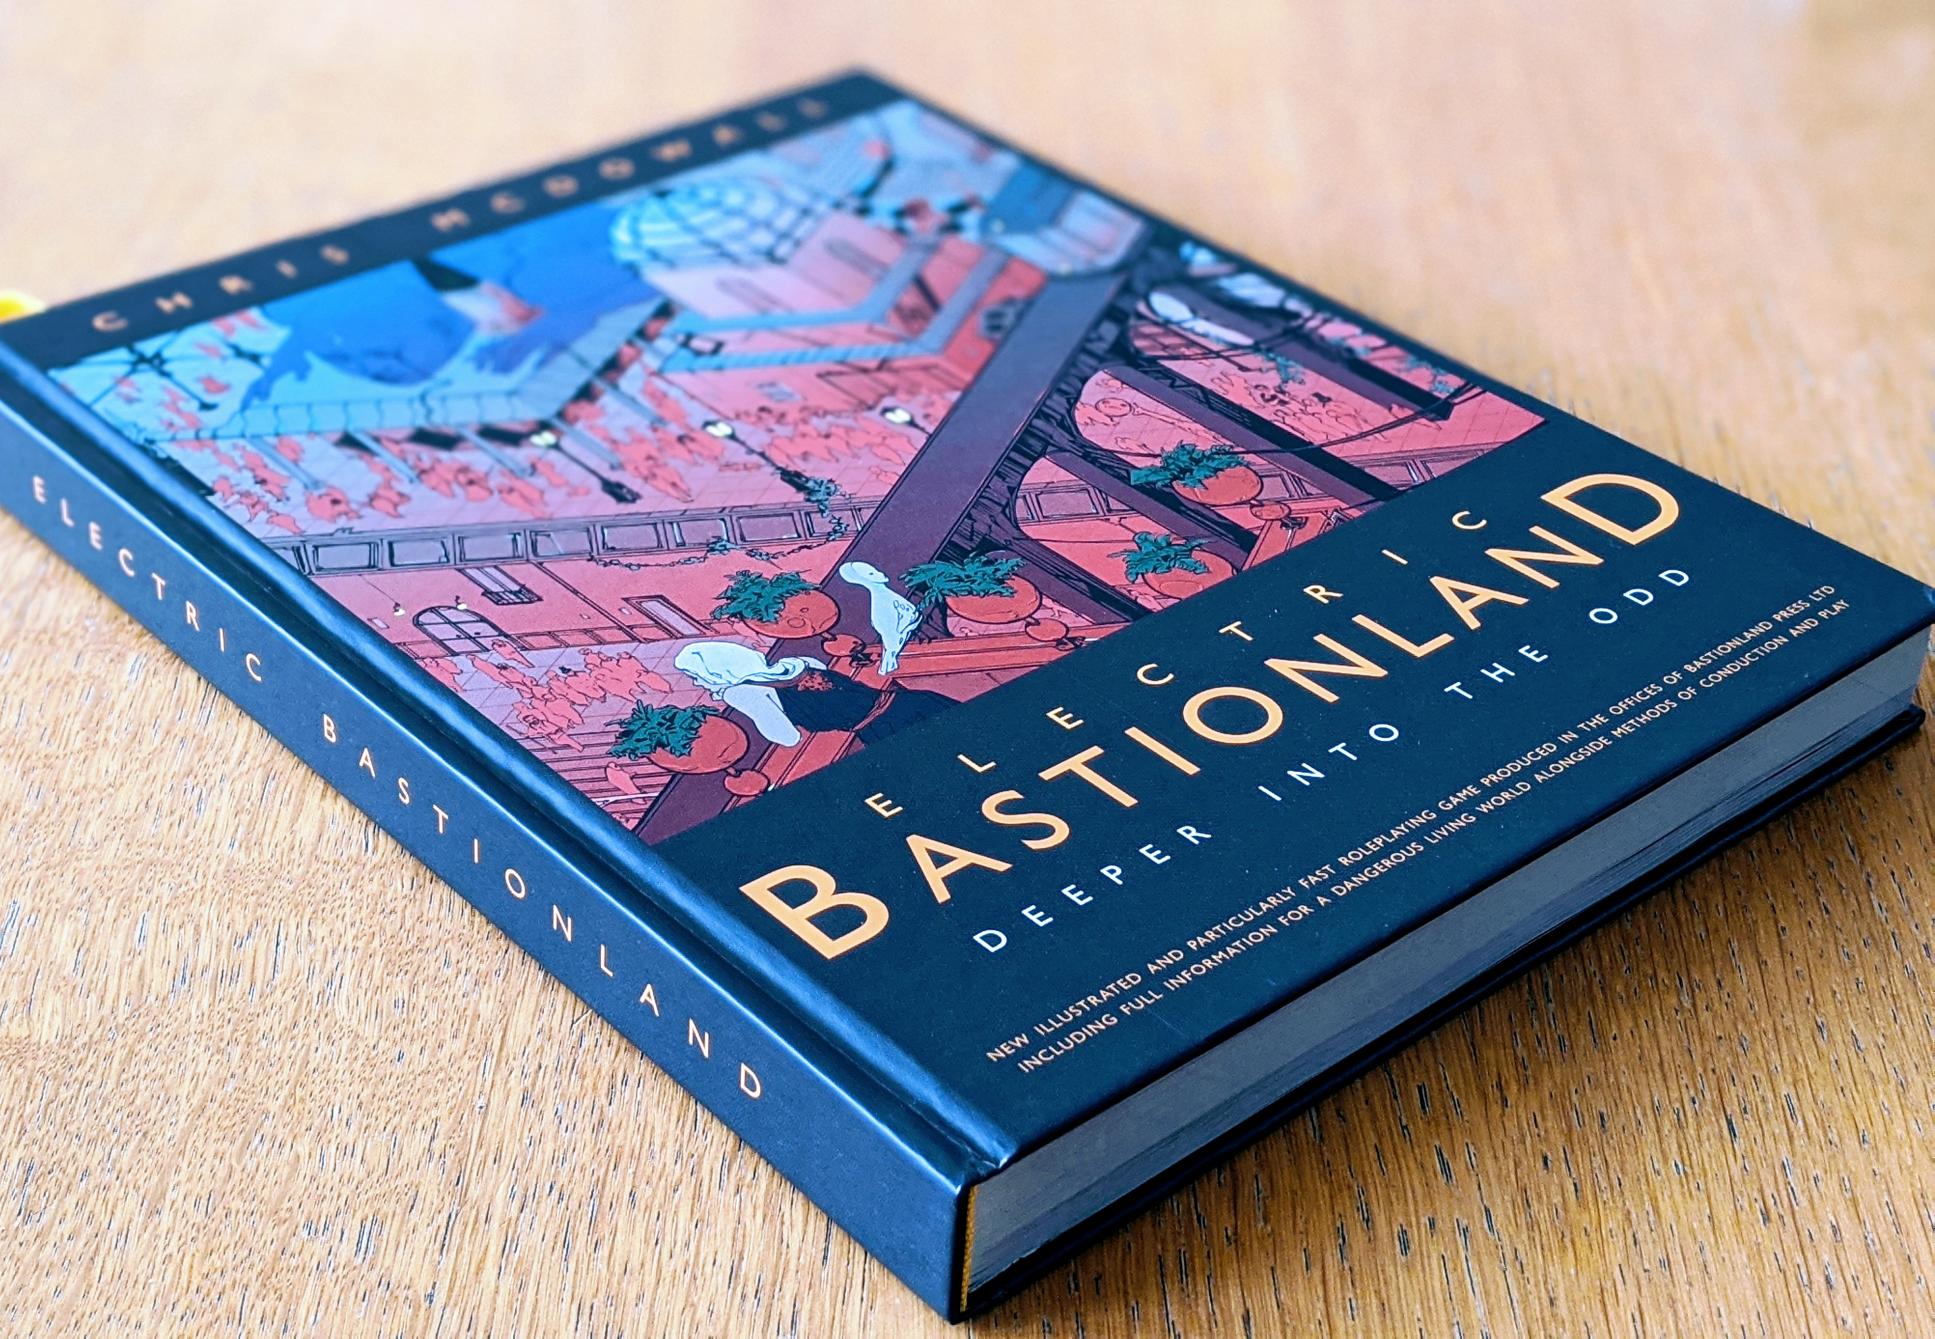 Electric Bastionland + PDF